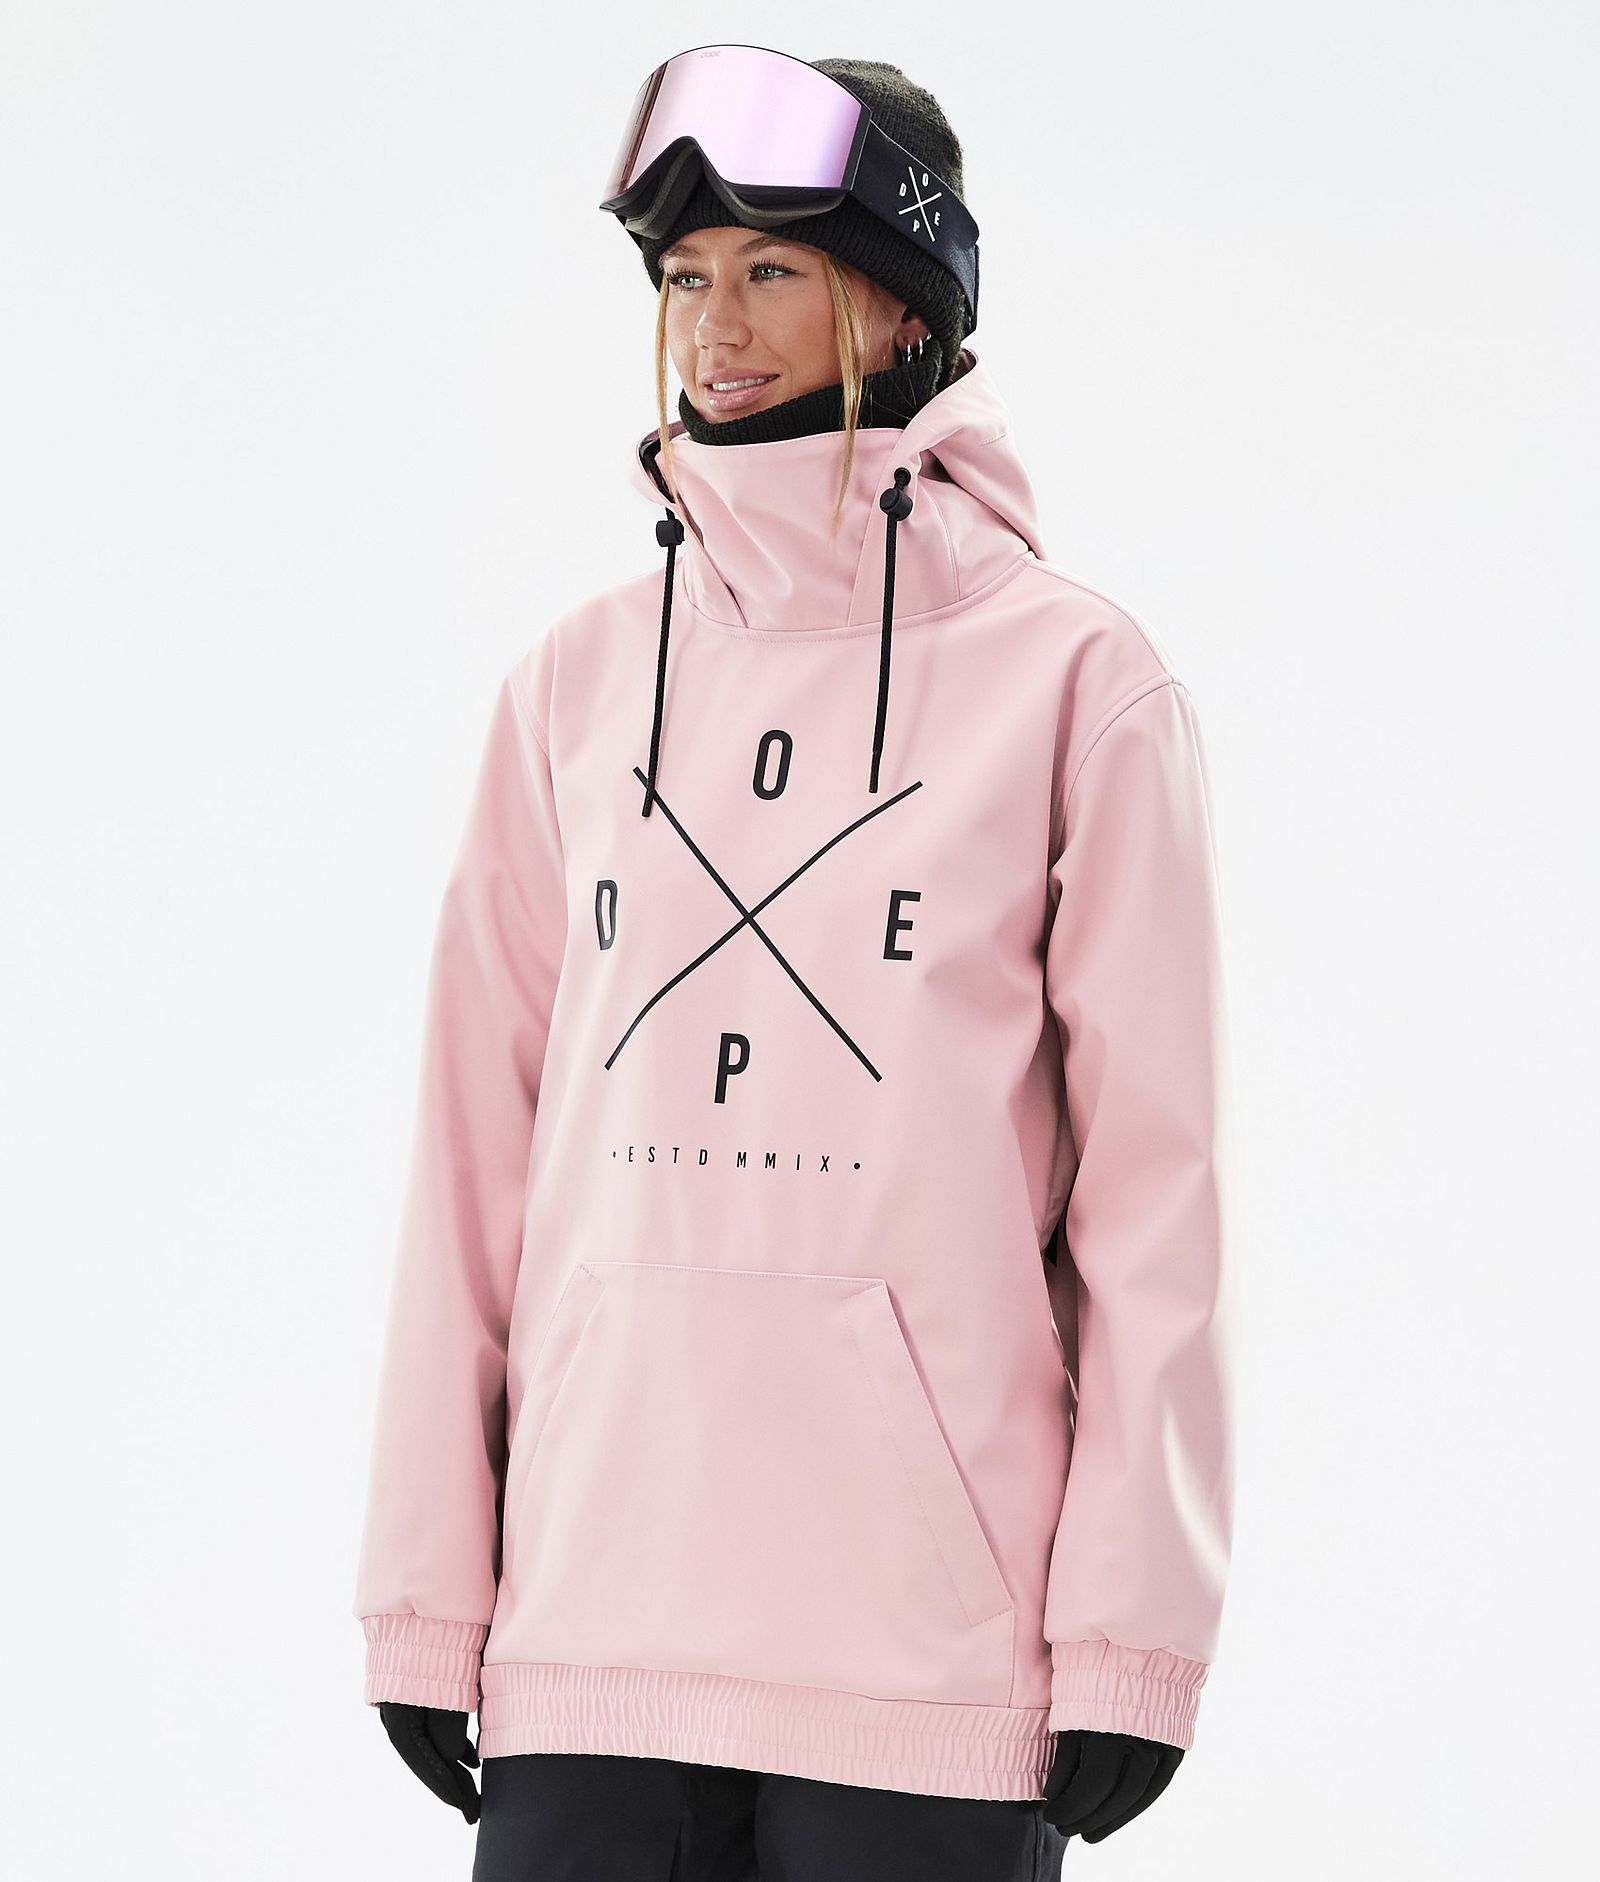 Yeti W Ski jas Dames 2X-Up Soft Pink, Afbeelding 1 van 7